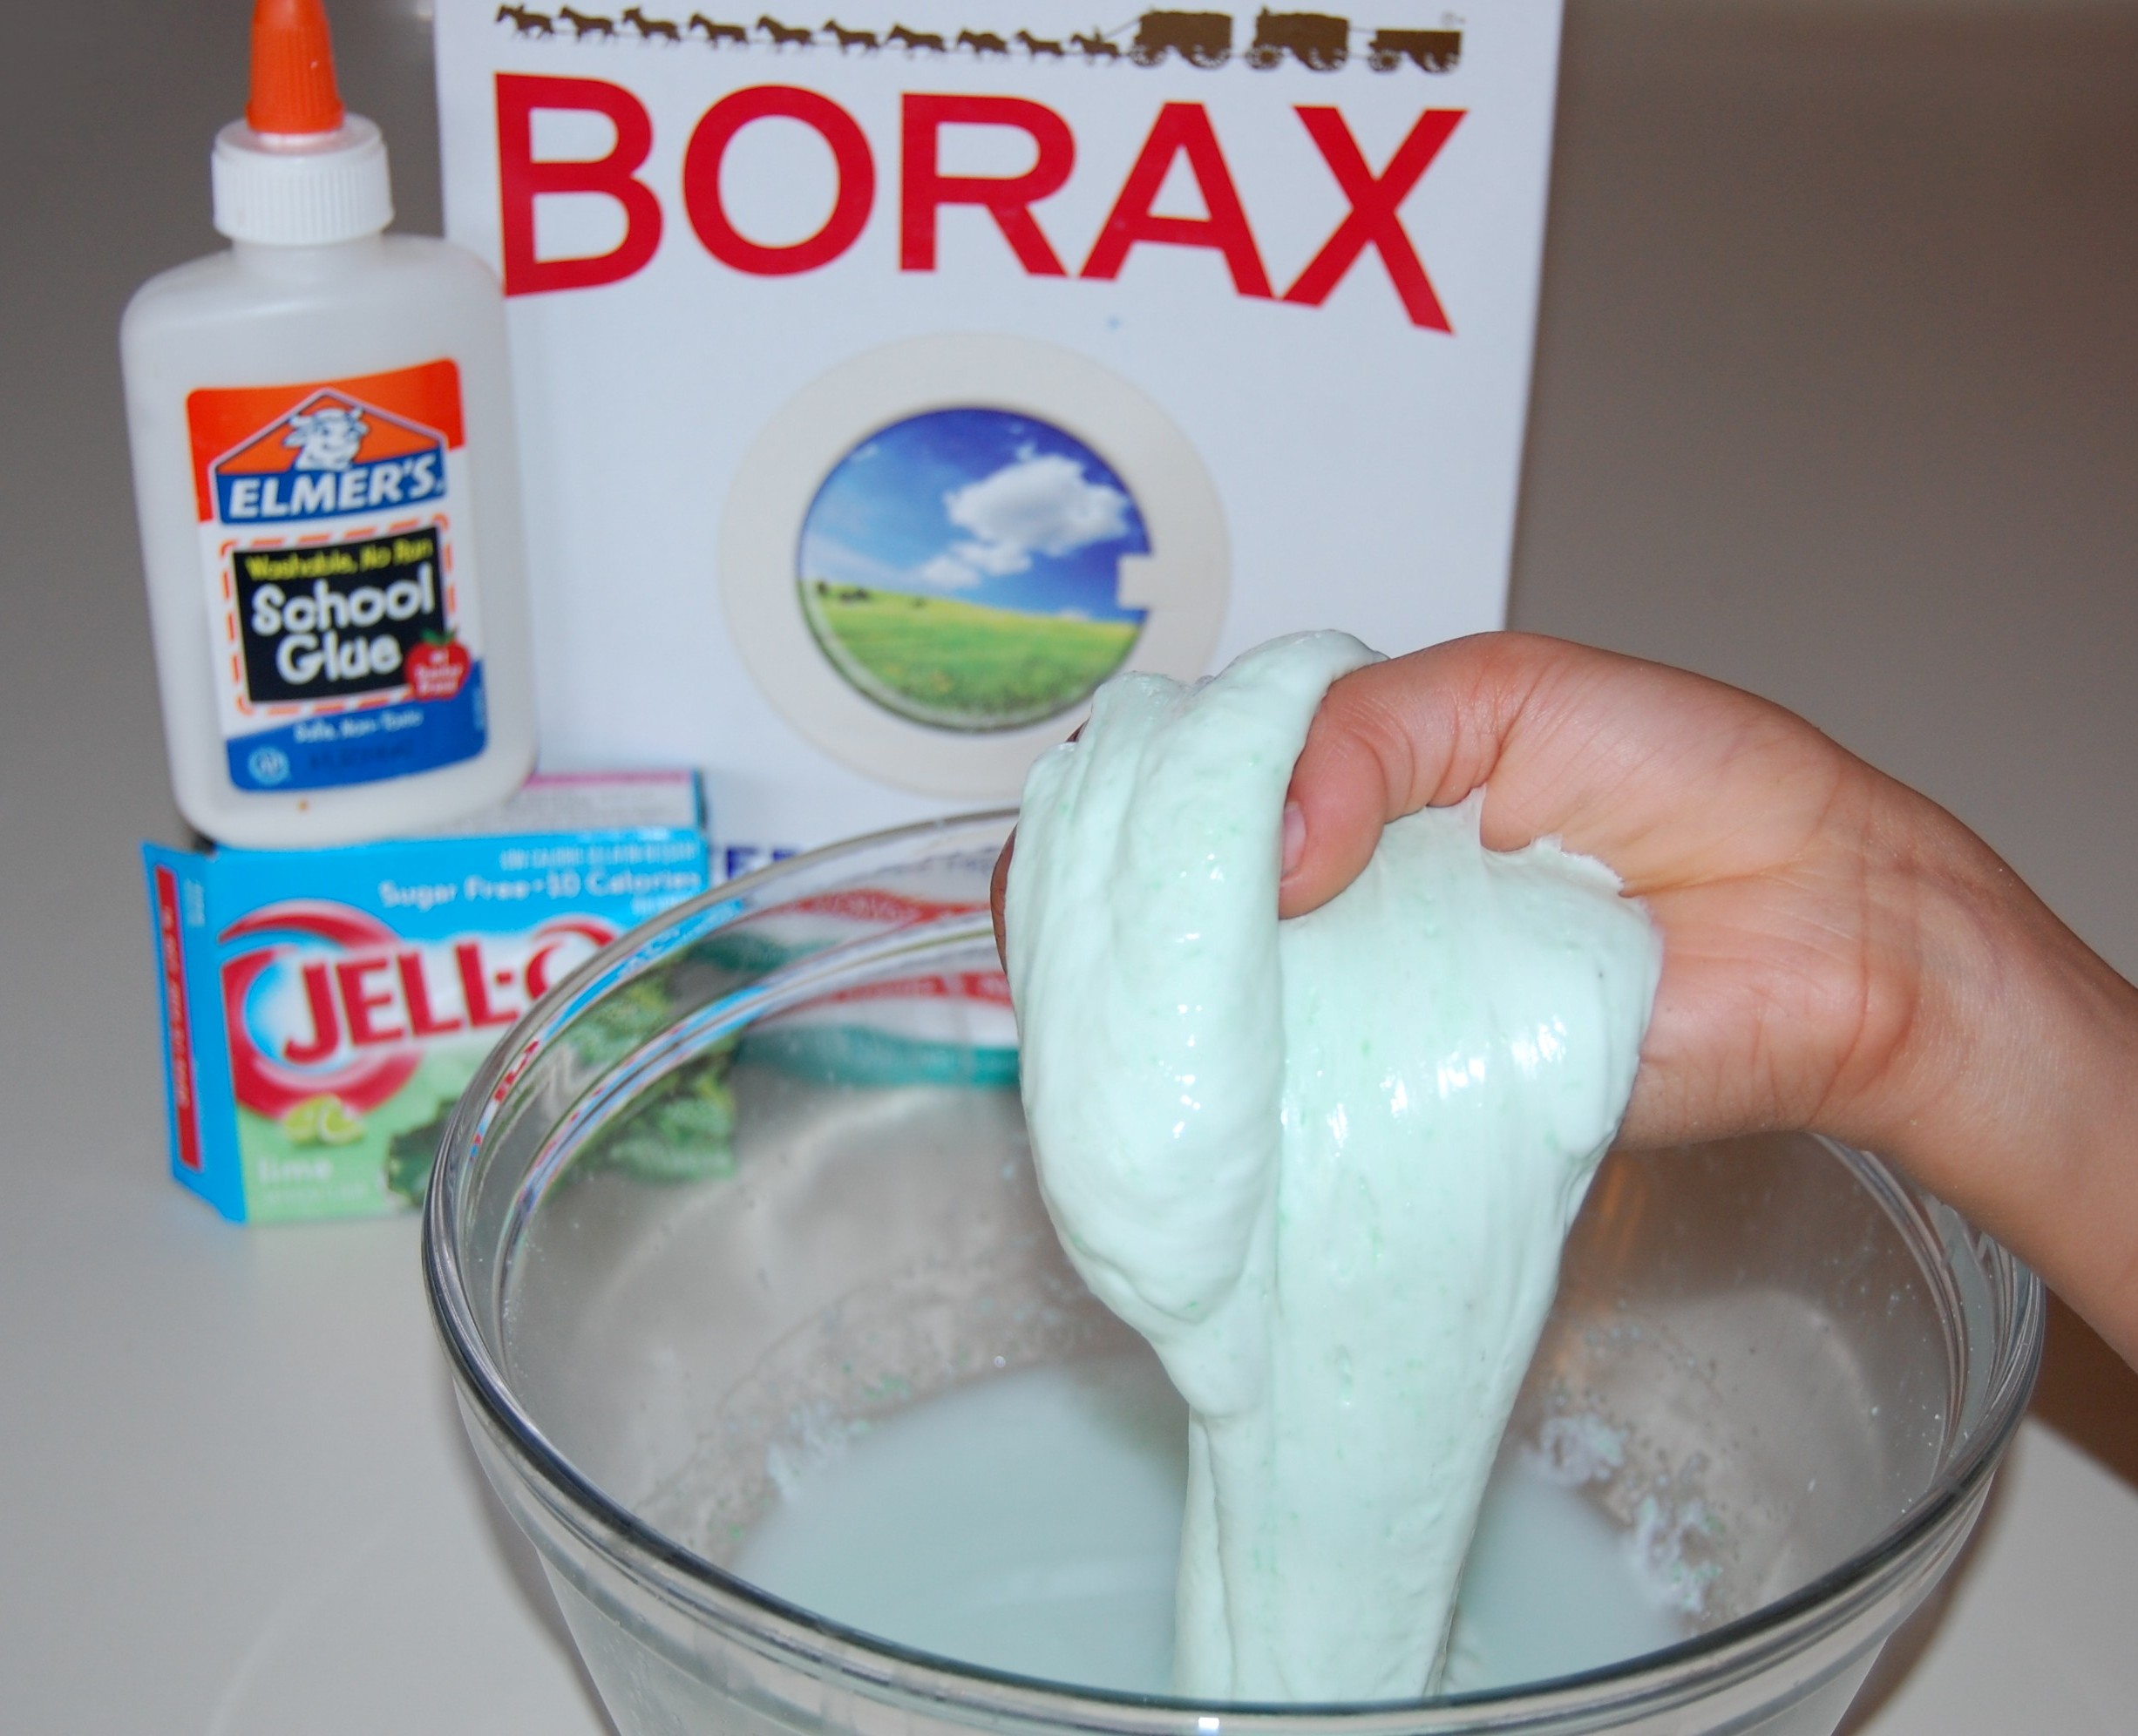 How to make slime with borax